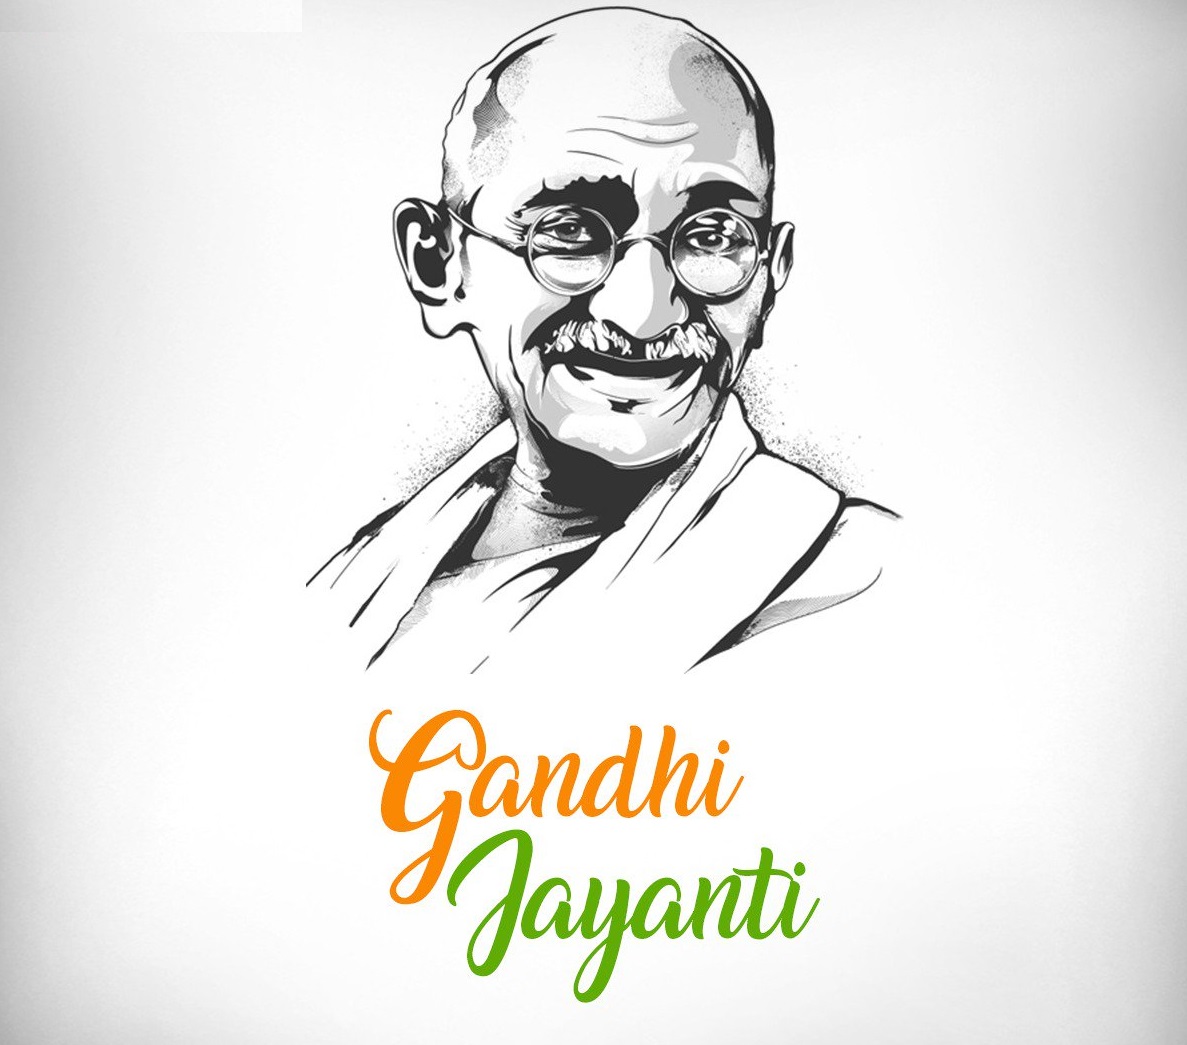 2022 | IndianBureaucracy.com tribute on Gandhi Jayanti